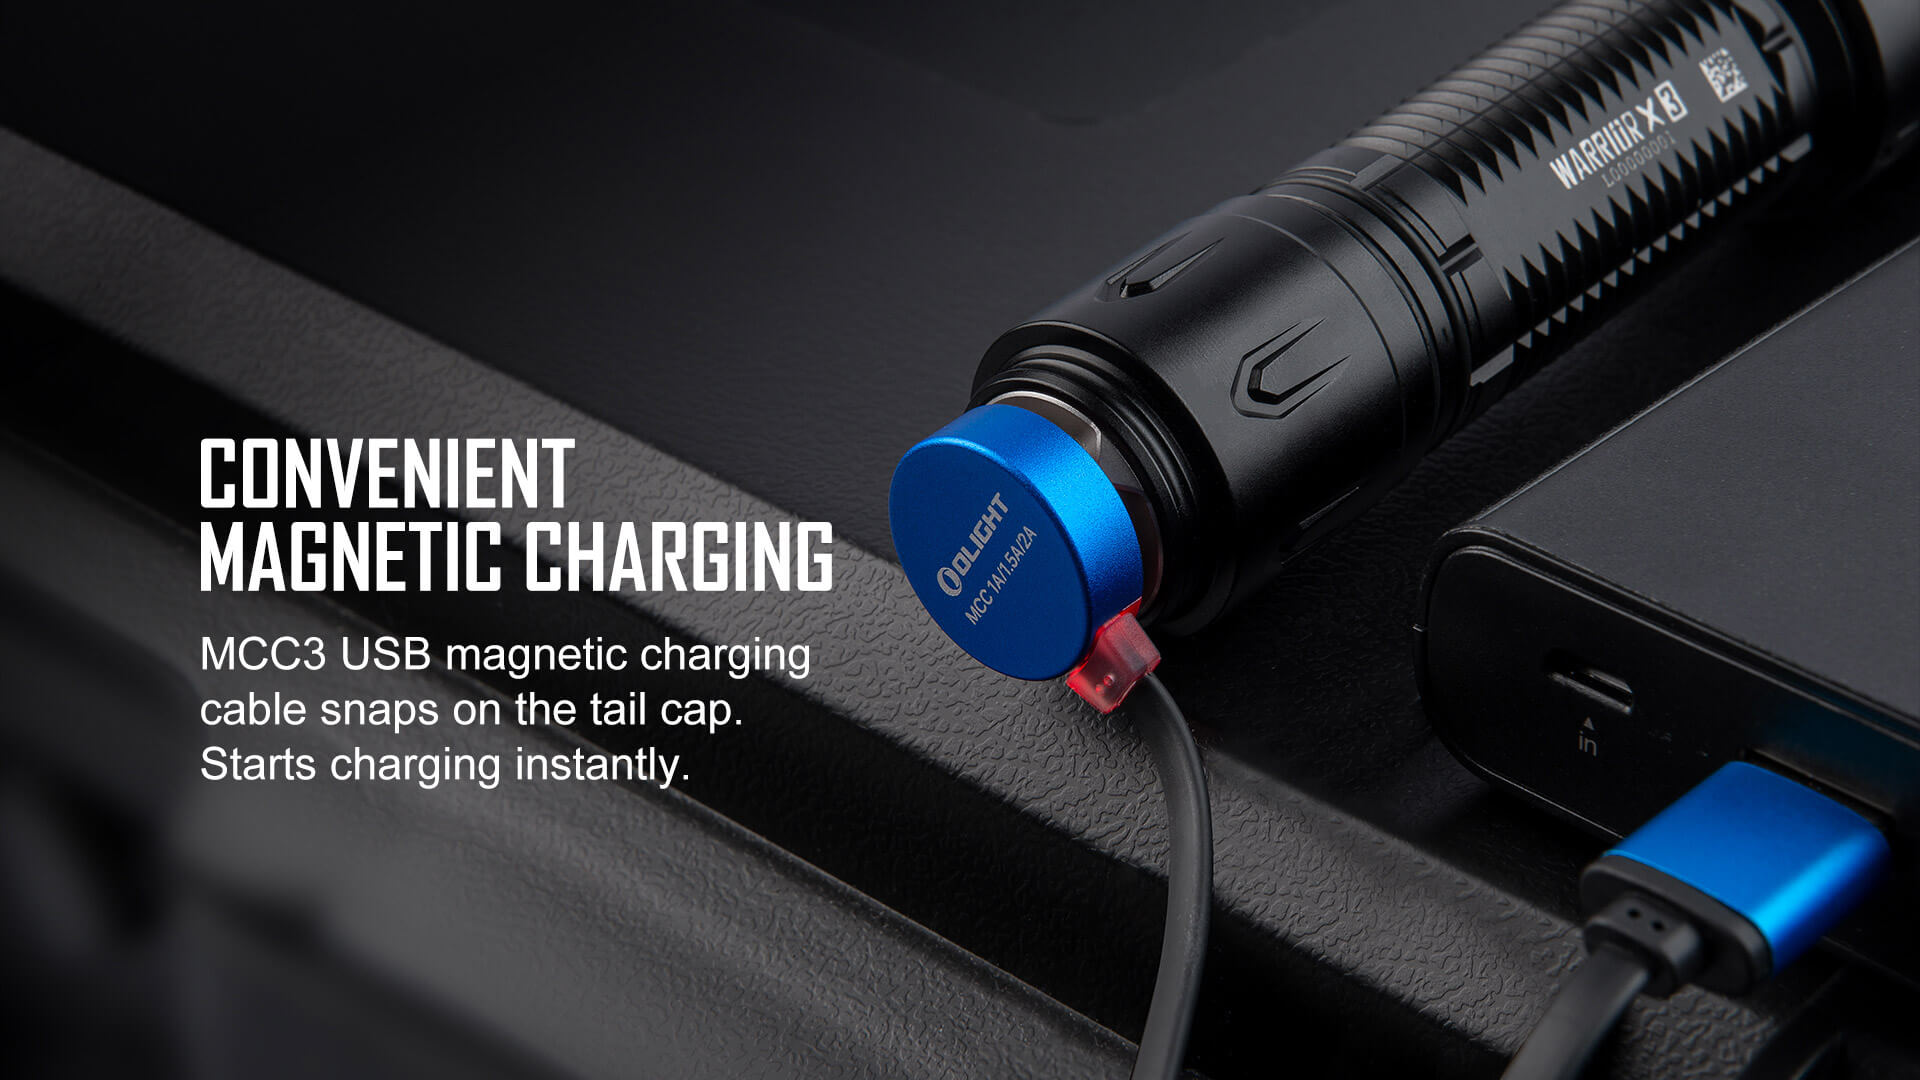 Convenient magnetic charging 